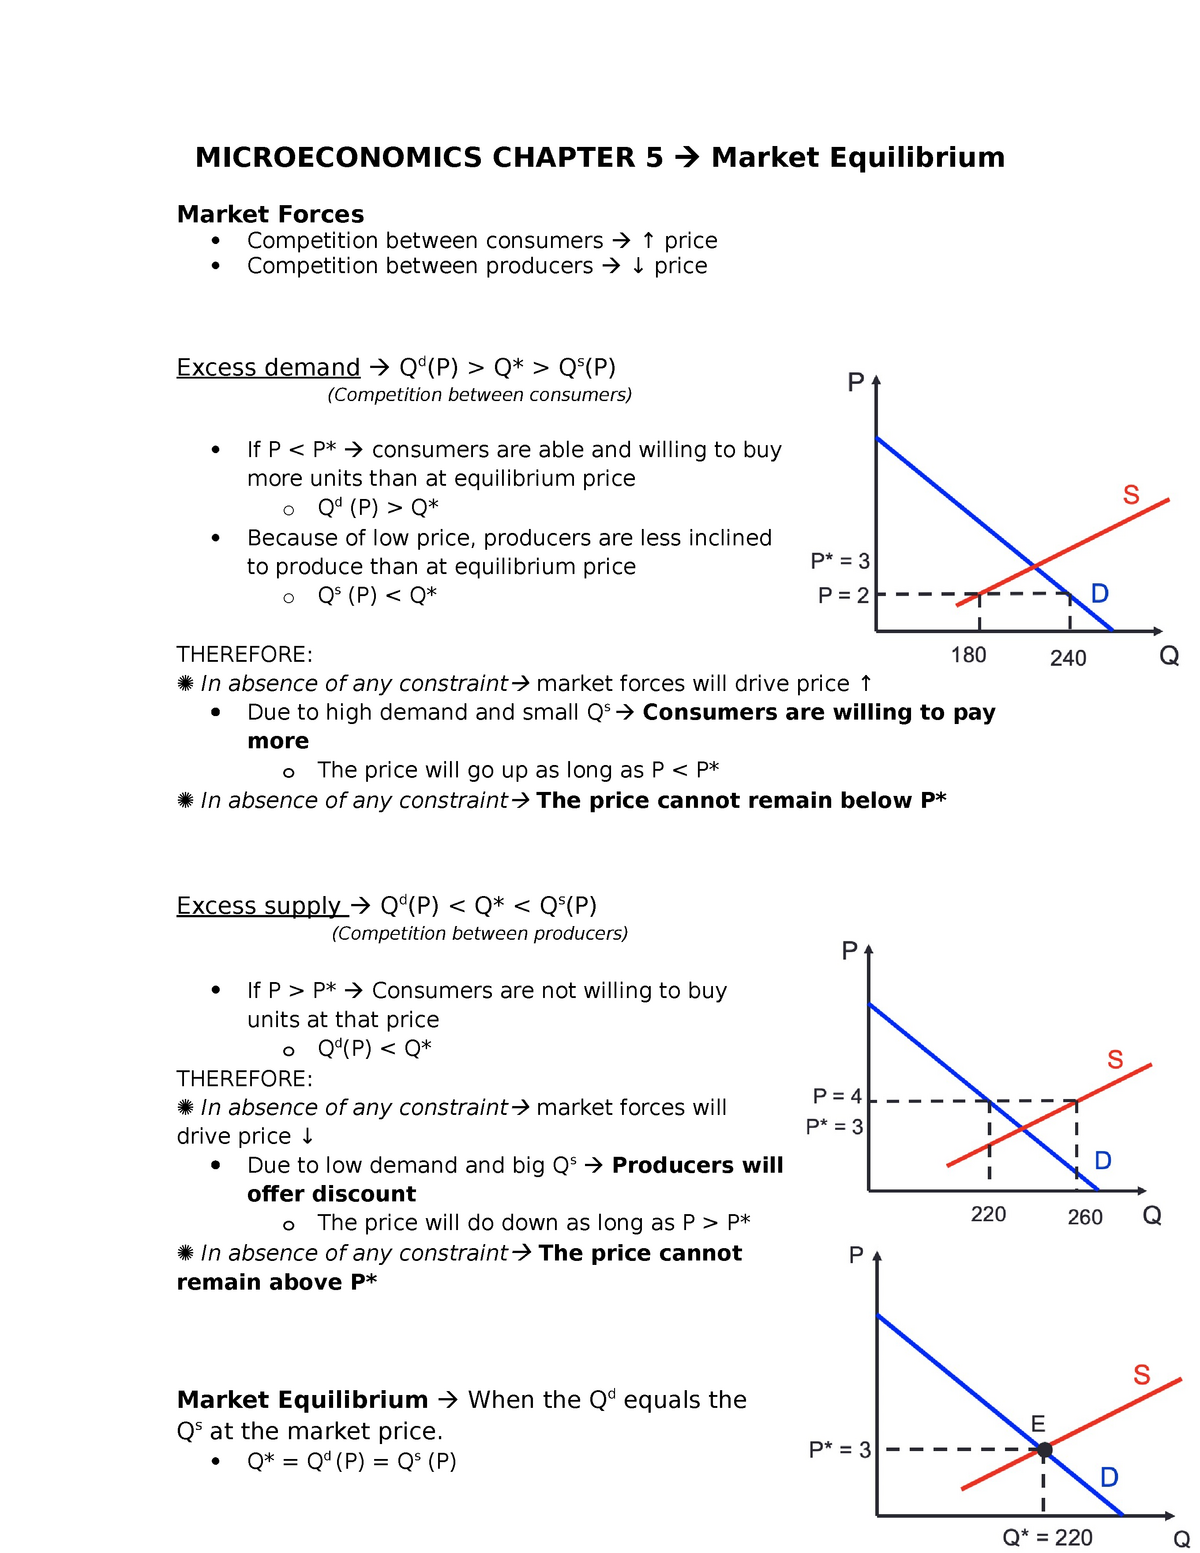 microeconomics chapter 5 homework